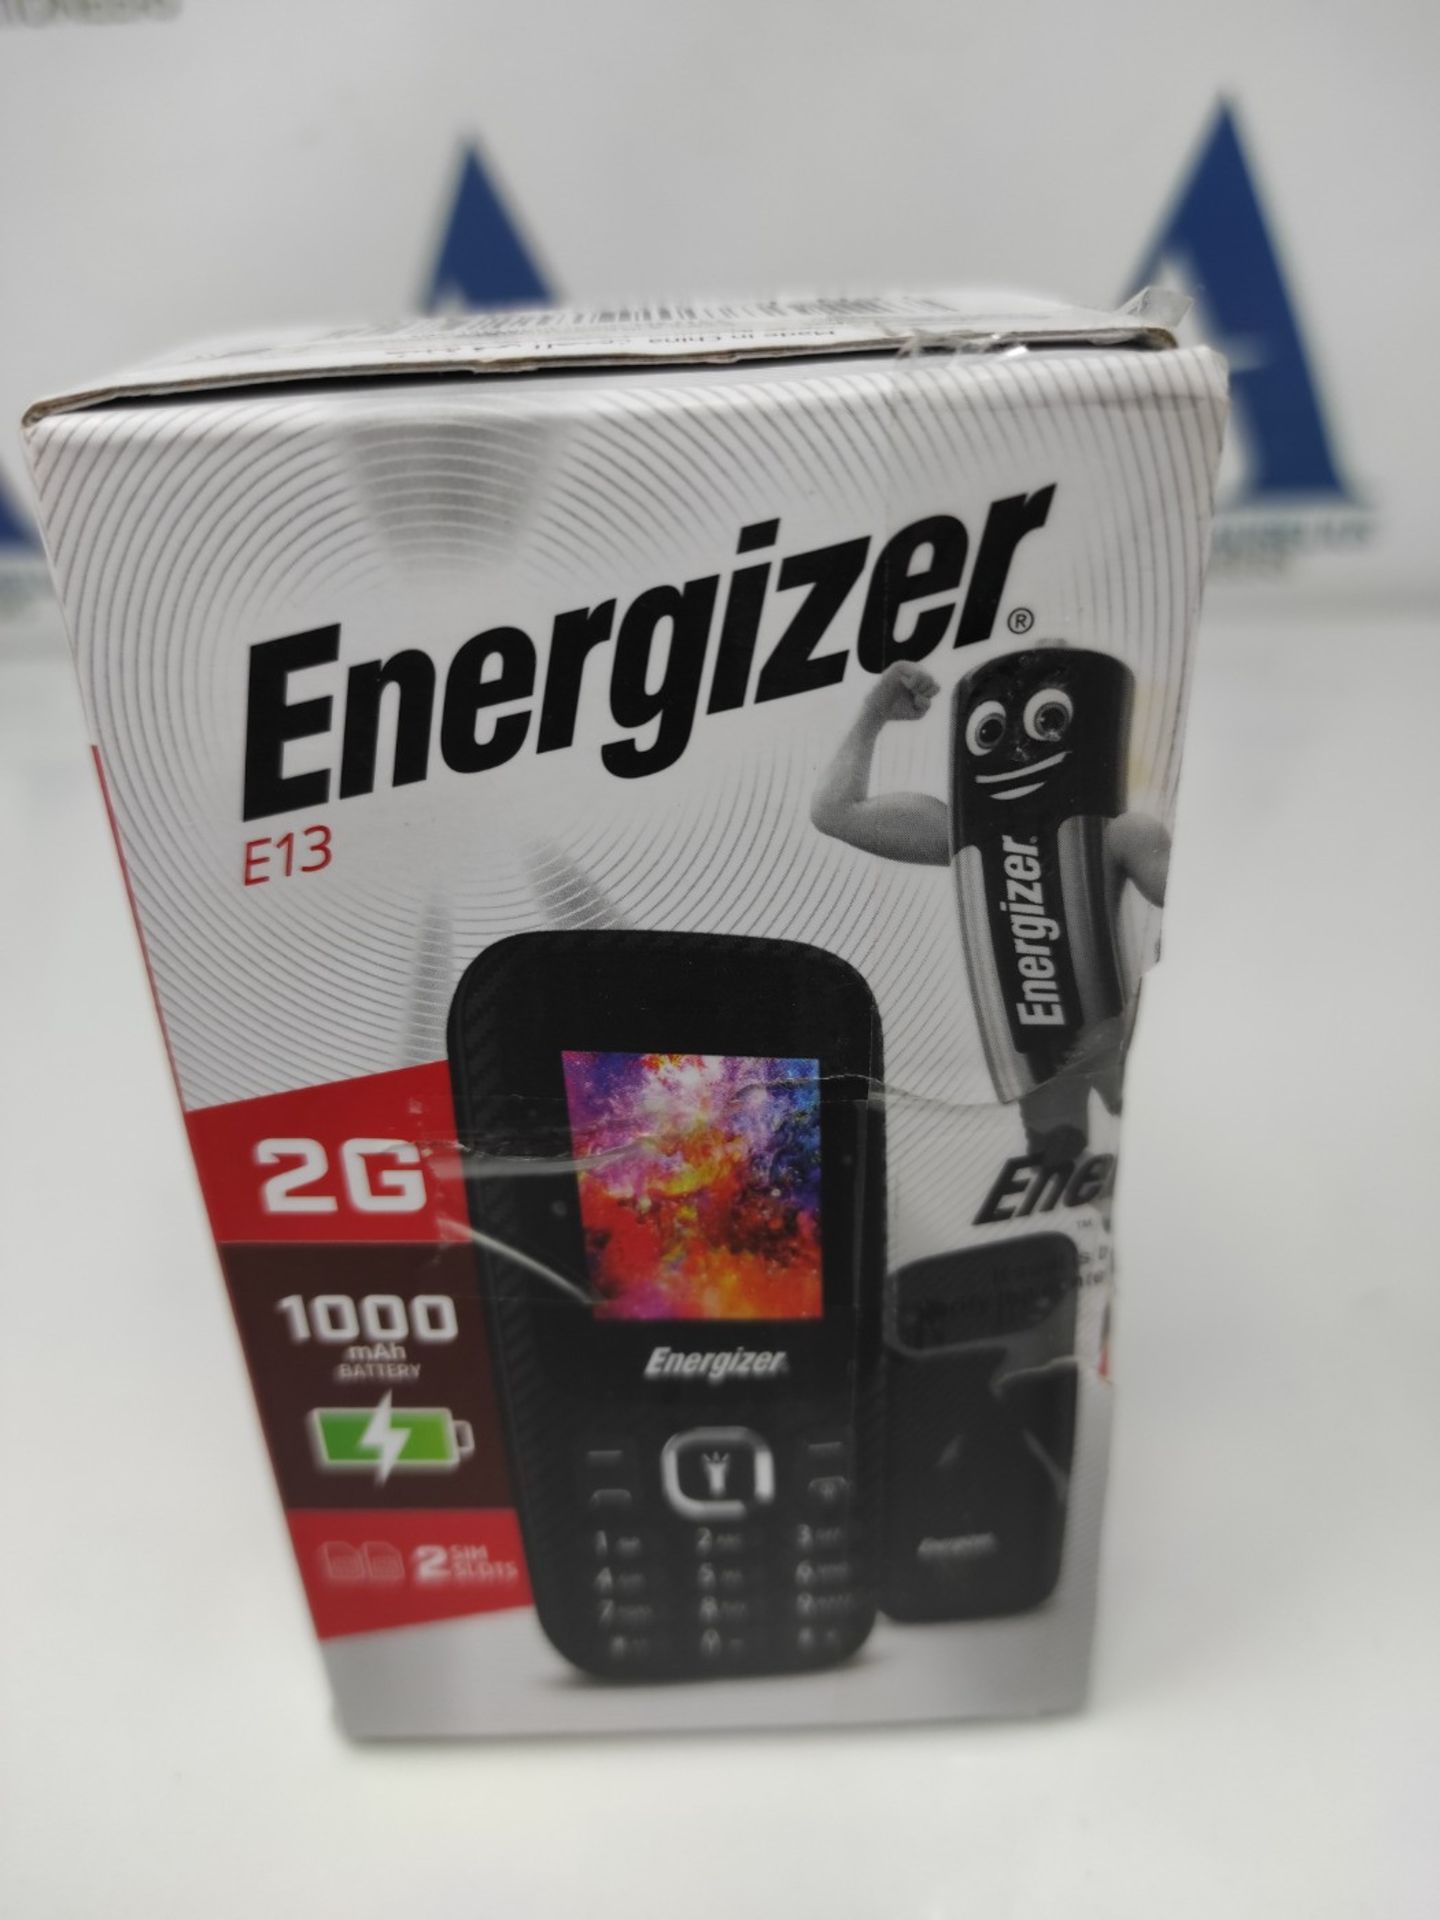 Energizer - Mobile E13-2G - Dual Sim Mobile Phone - Black - Mini SIM - Torch - Image 2 of 3